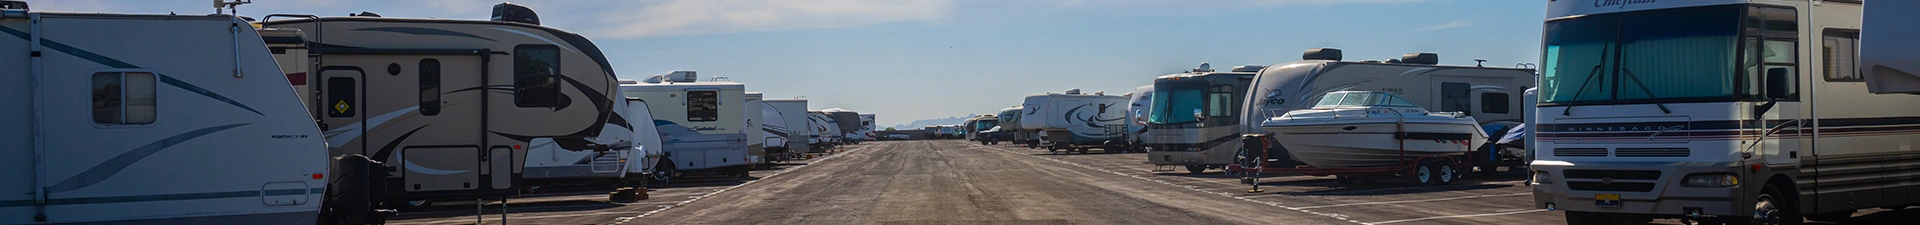 RV Storage & More in Buckeye Arizona